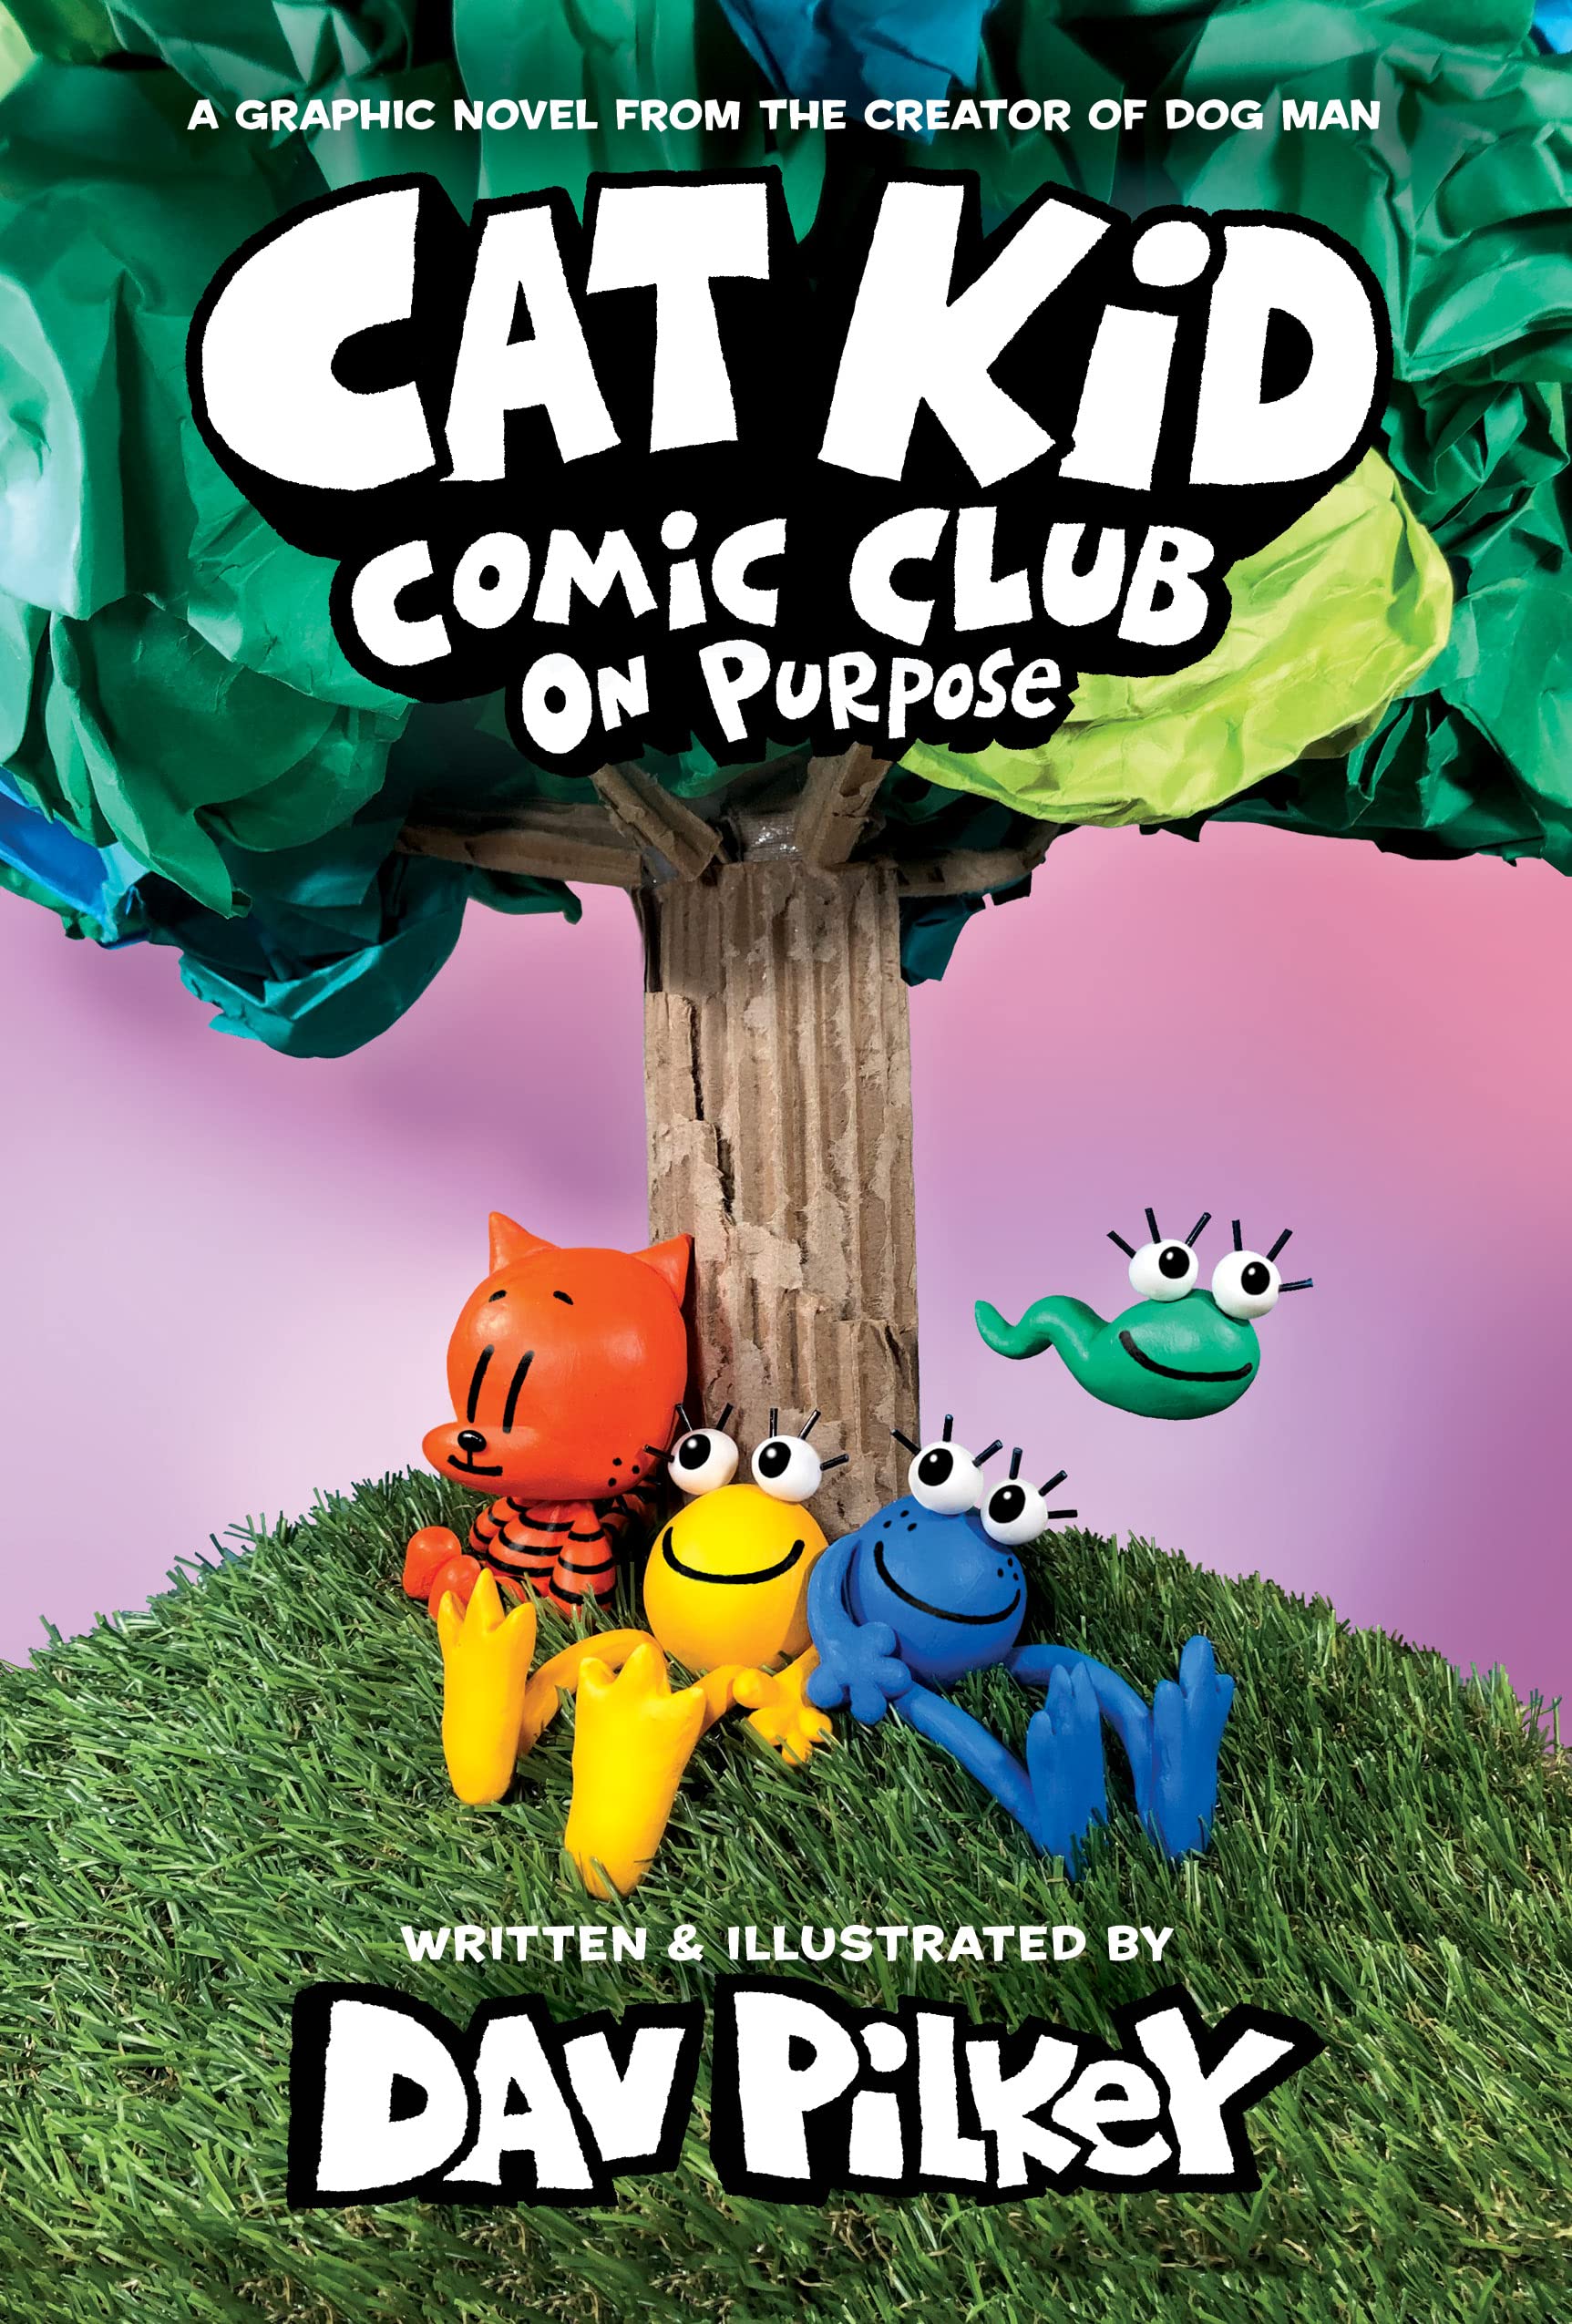 Cat kid comic club. 3 on purpose